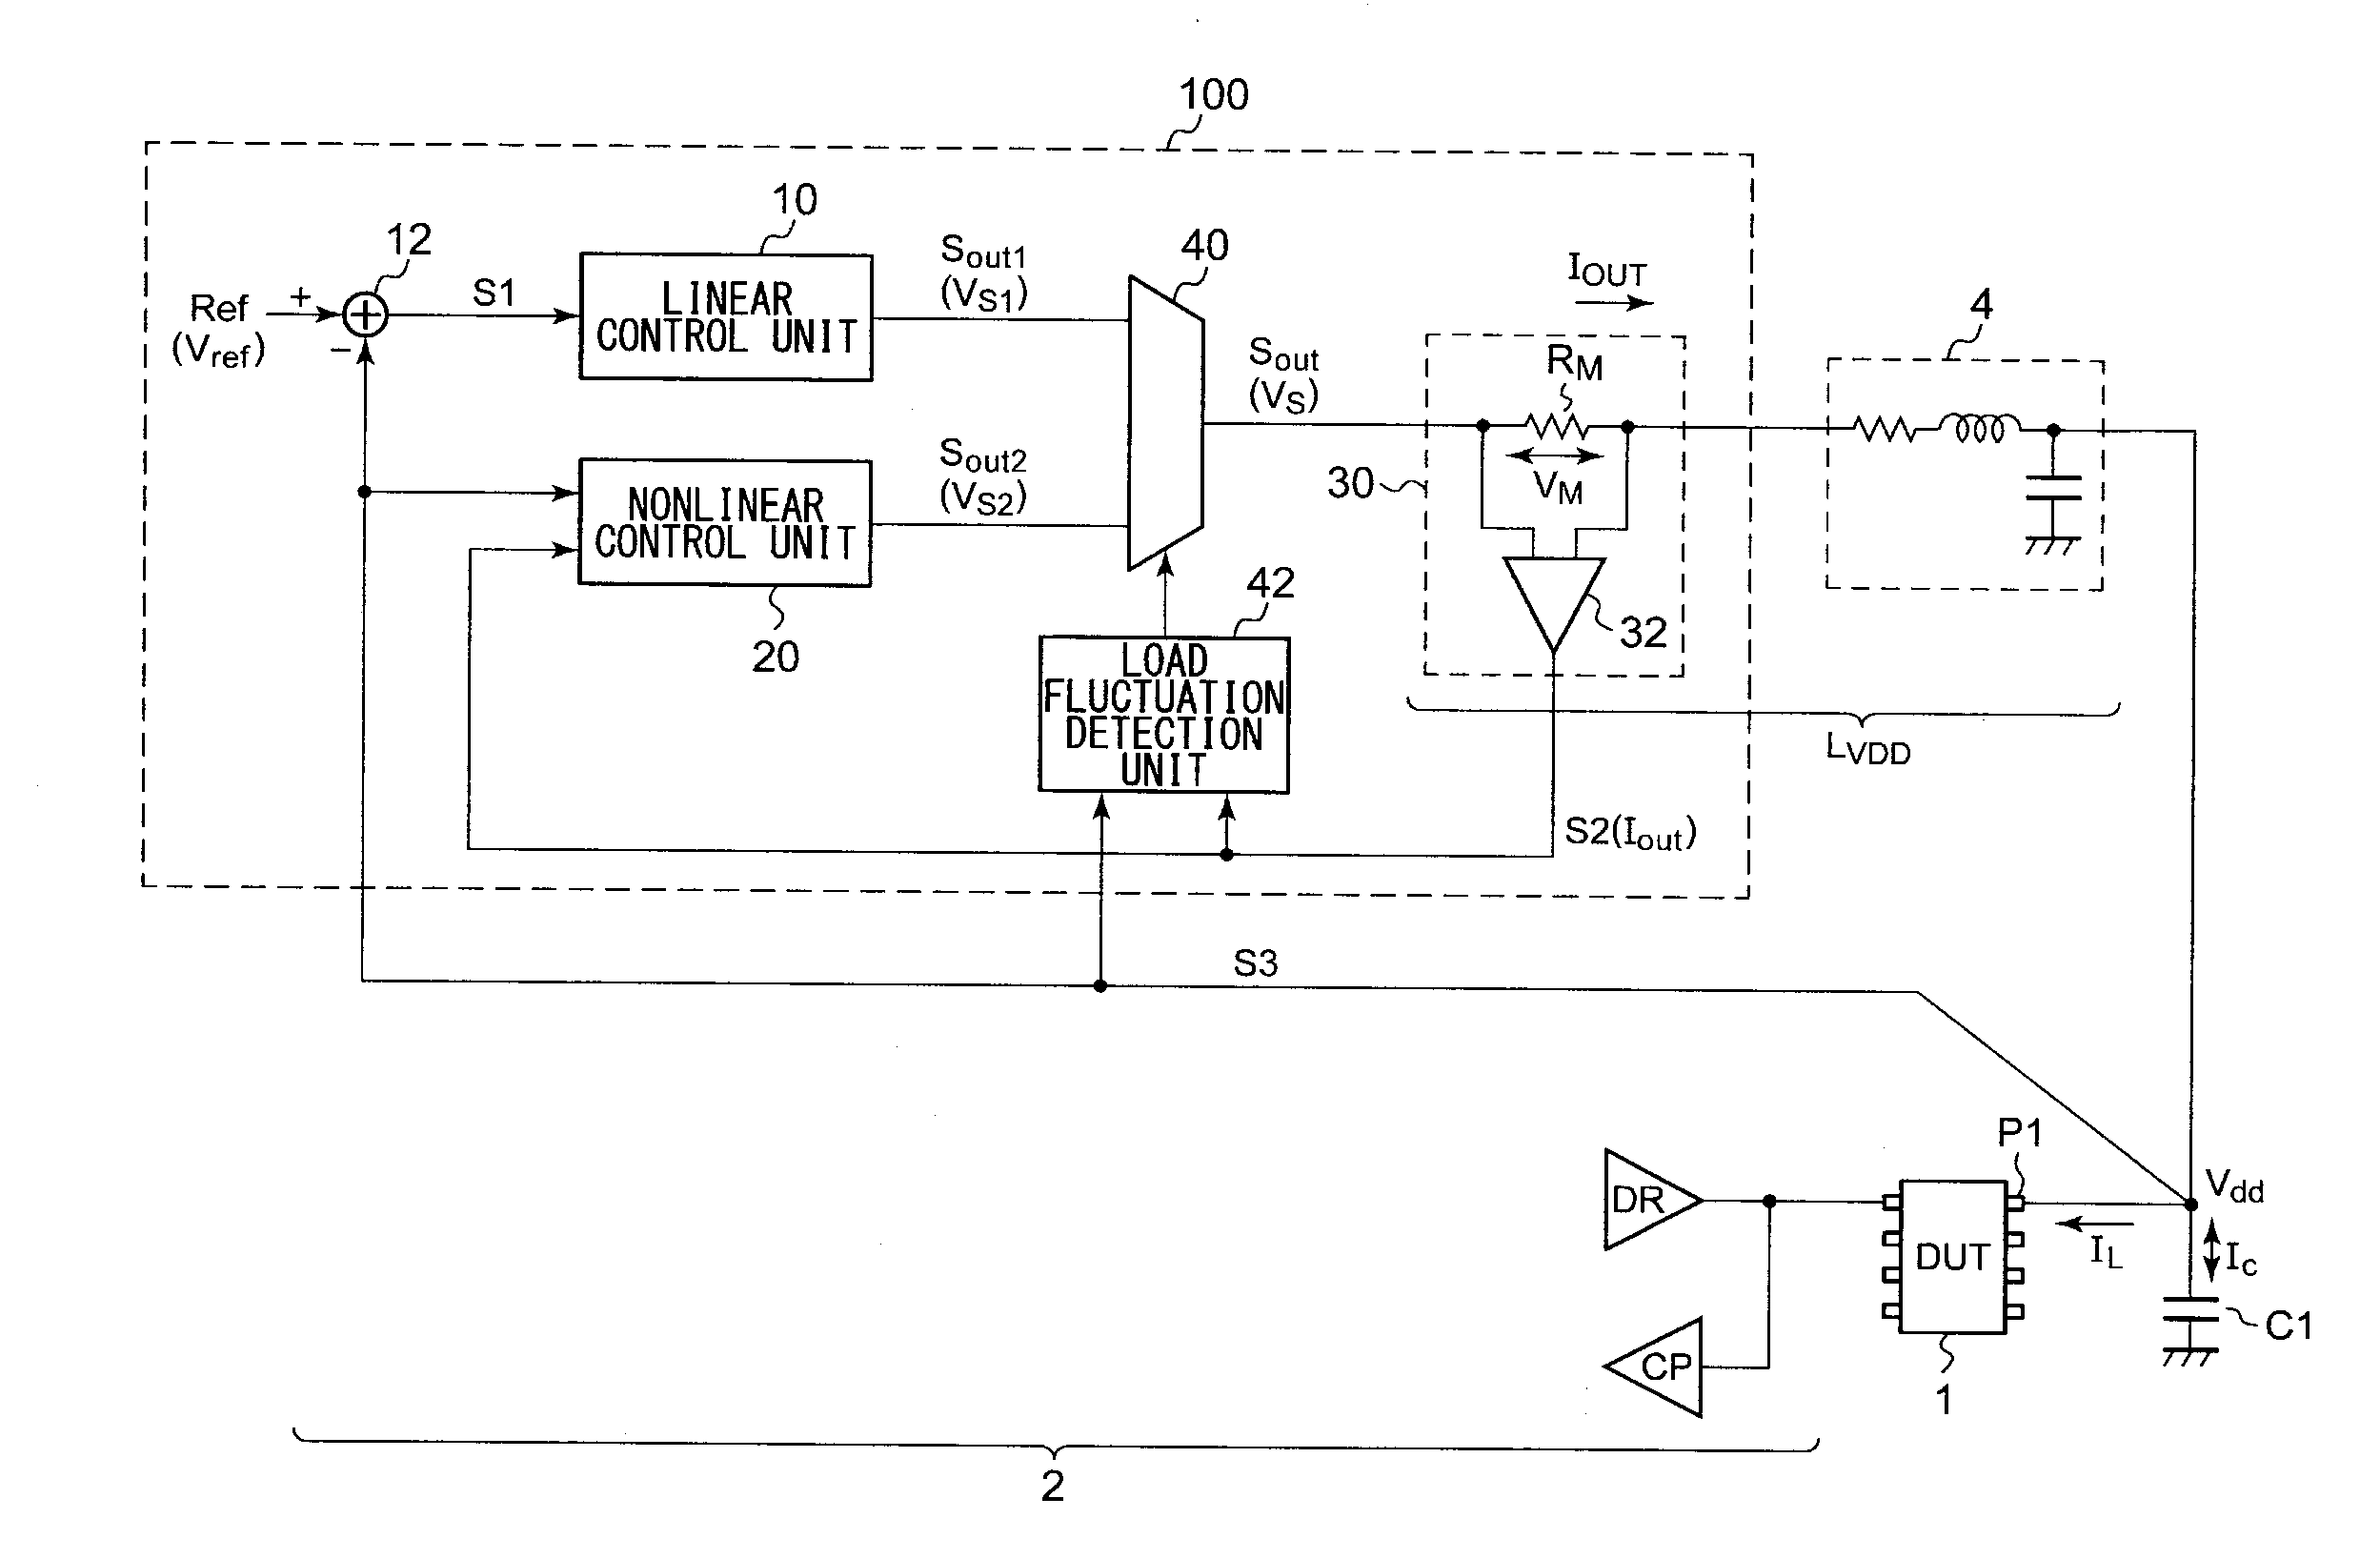 Power supply apparatus